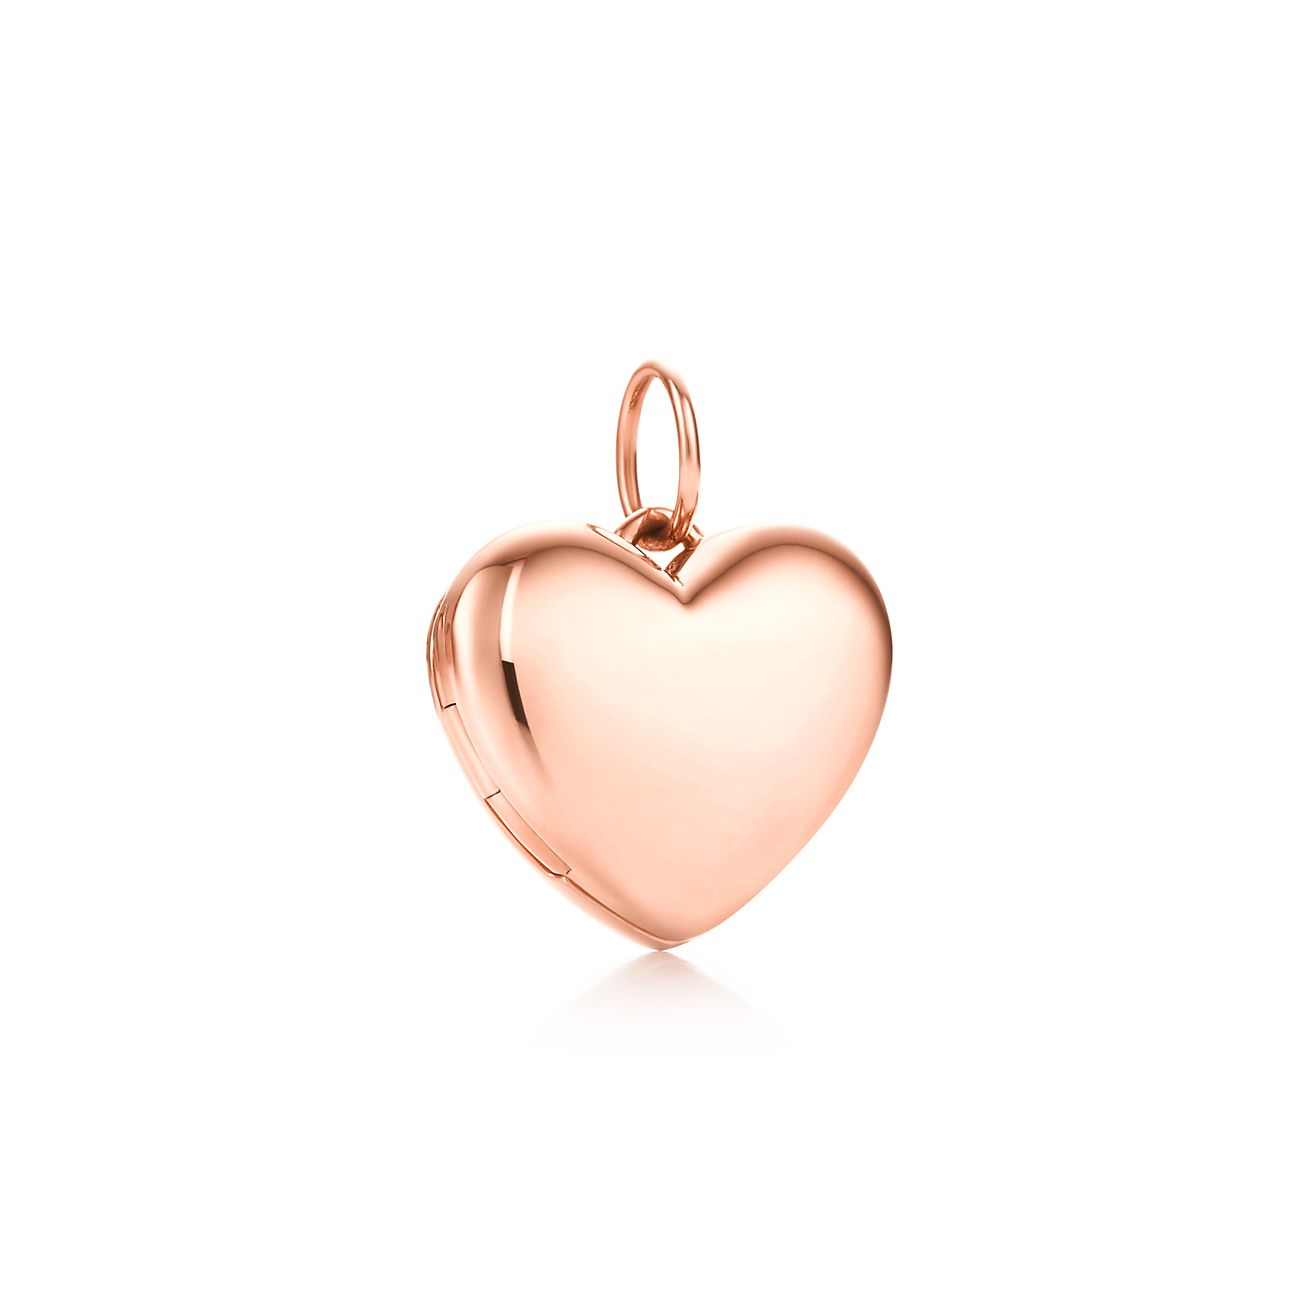 Heart locket in 18k rose gold, small 